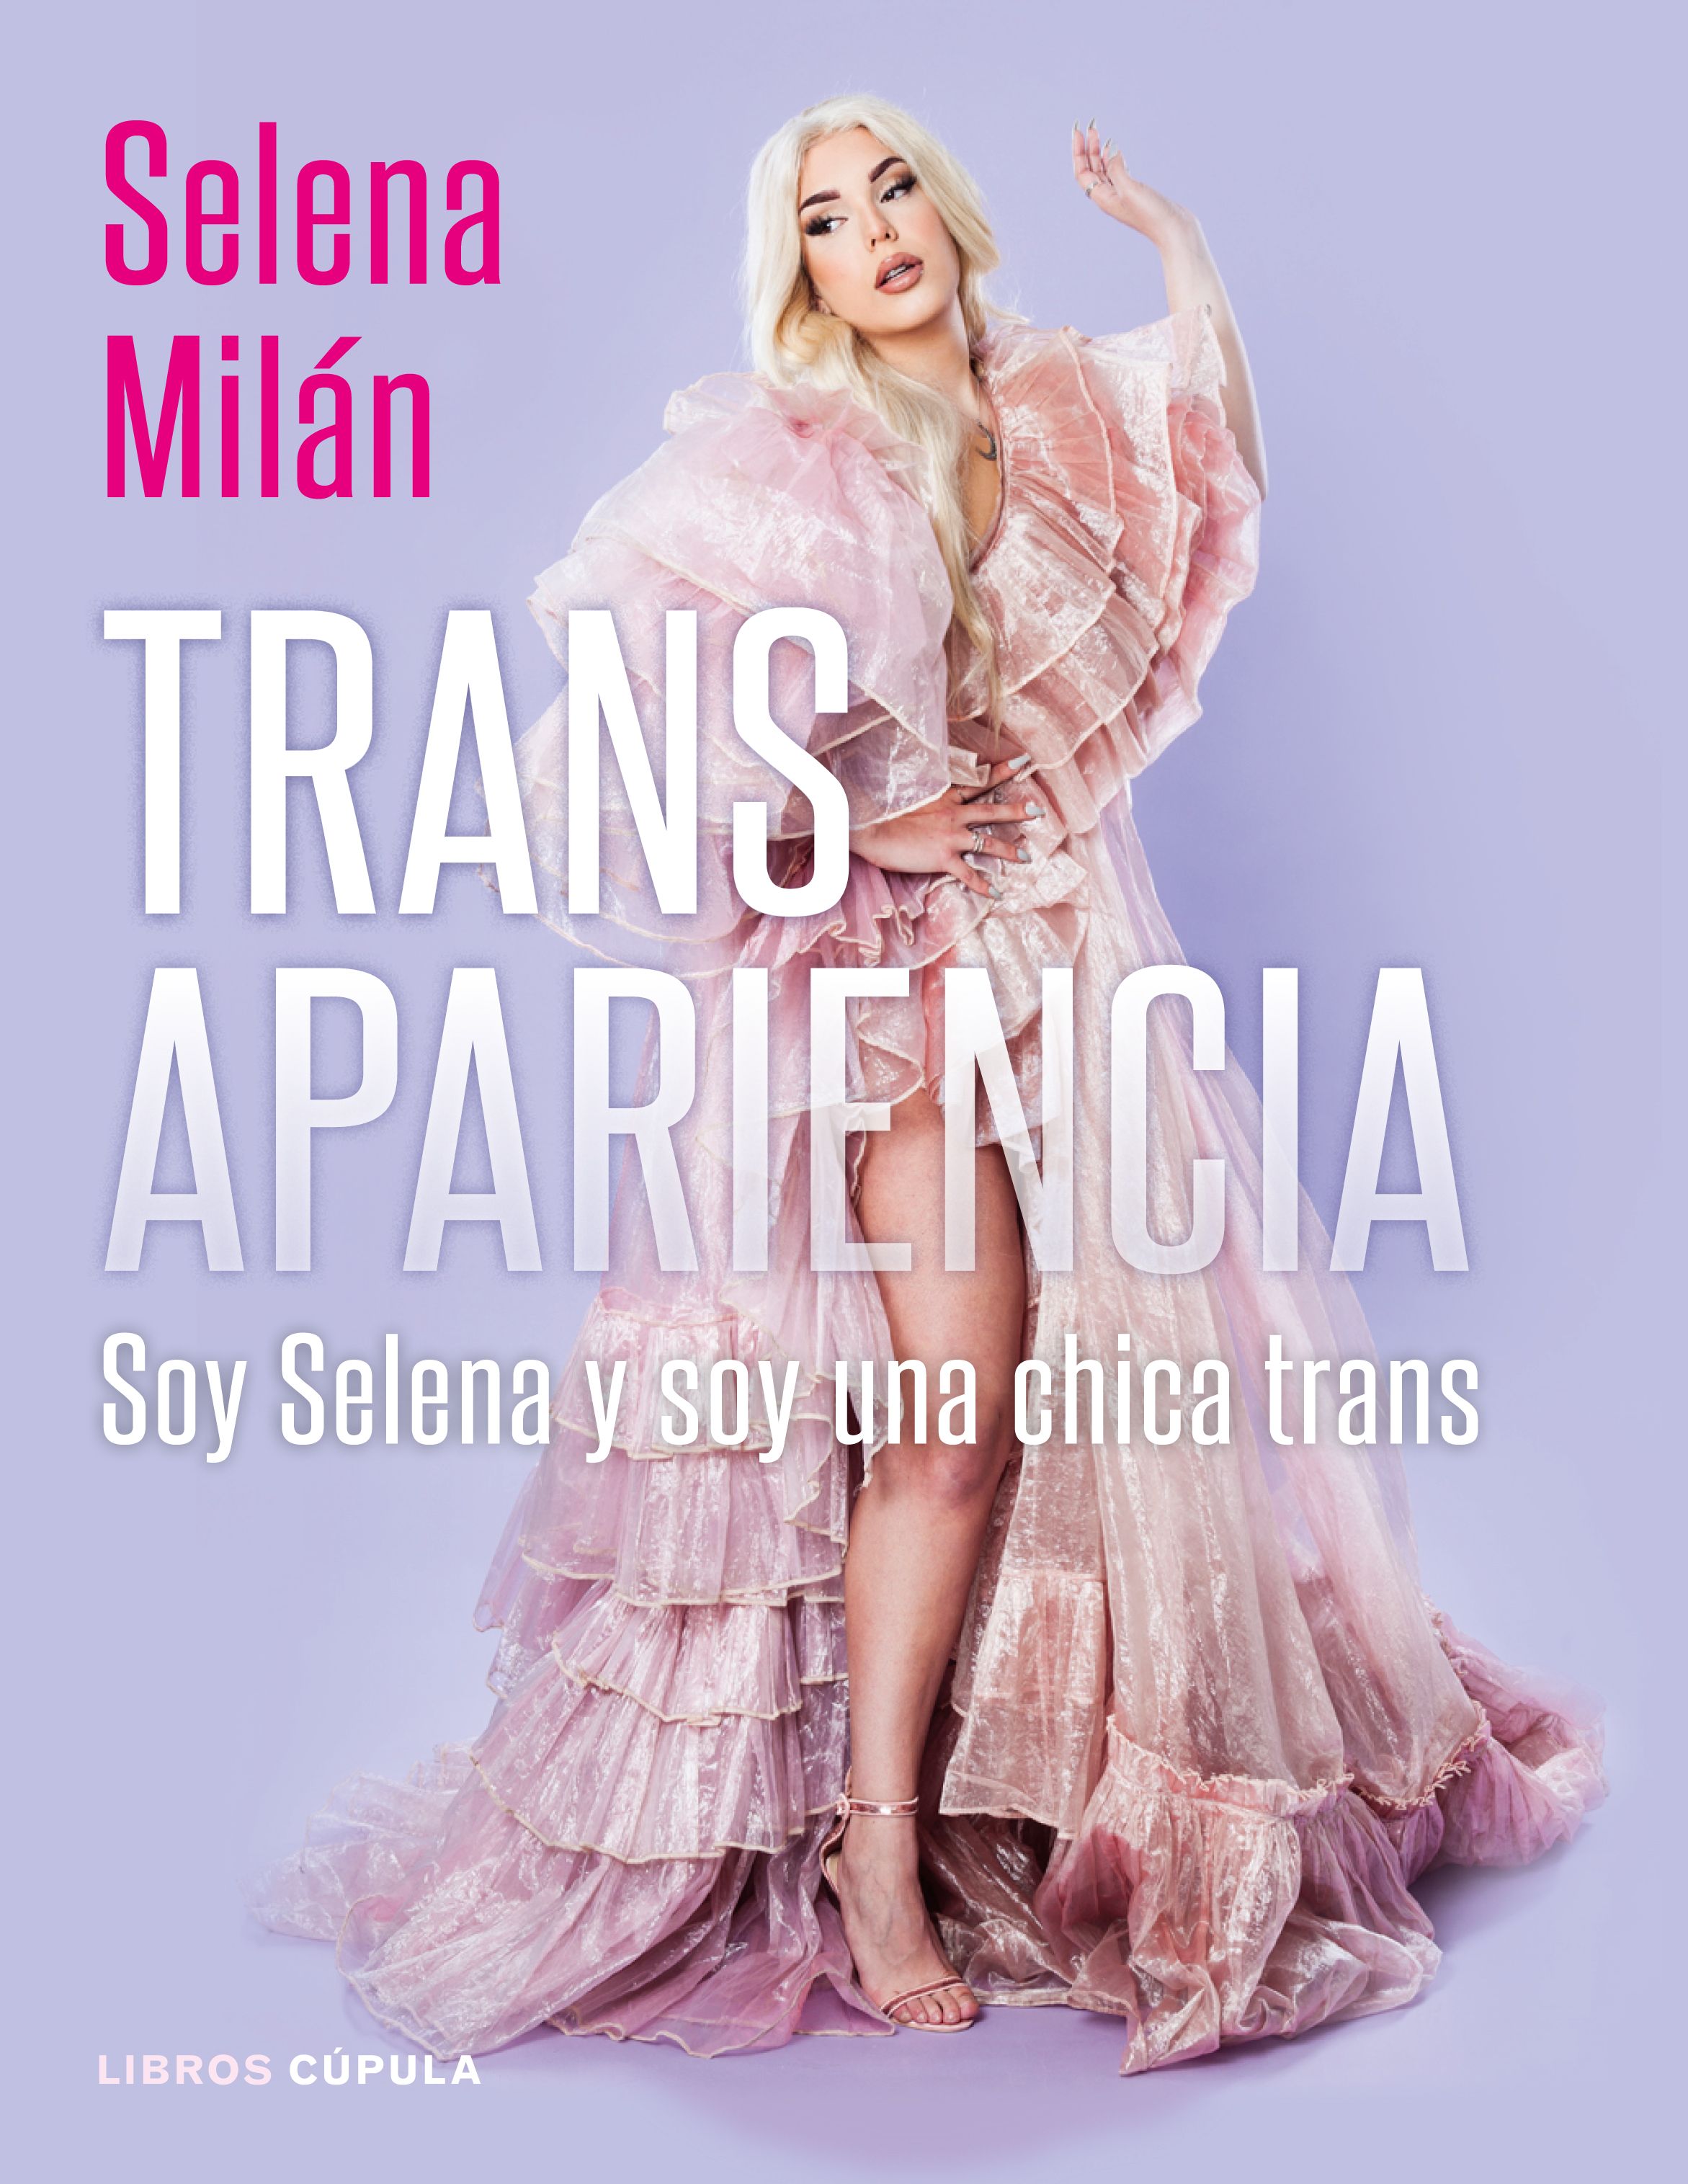 Selena Milán nos presenta Transapariencia